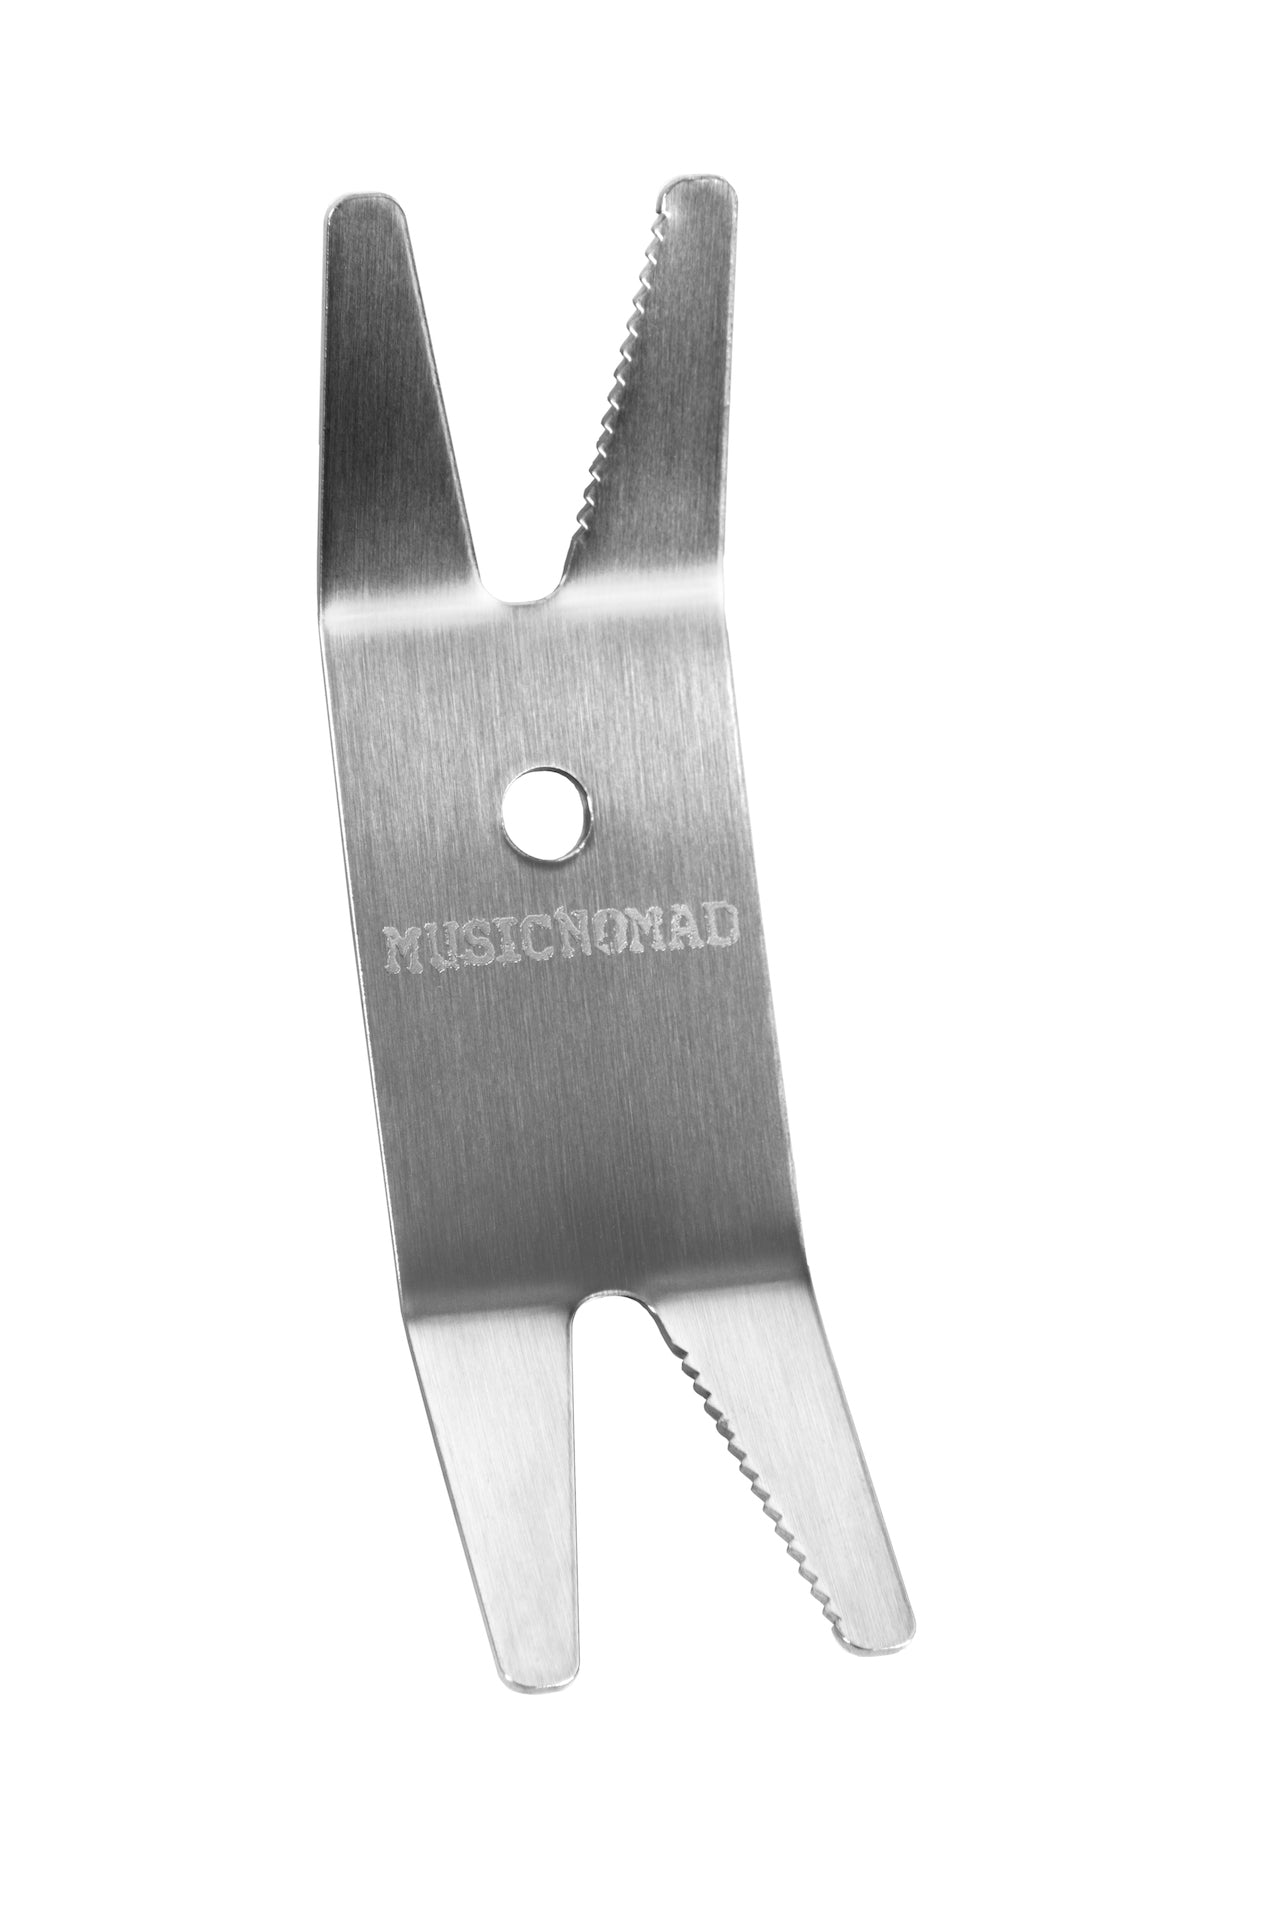 Music Nomad Premium Spanner Wrench w/ Microfiber Suede Backing MN224 - HIENDGUITAR   musicnomad musicnomad